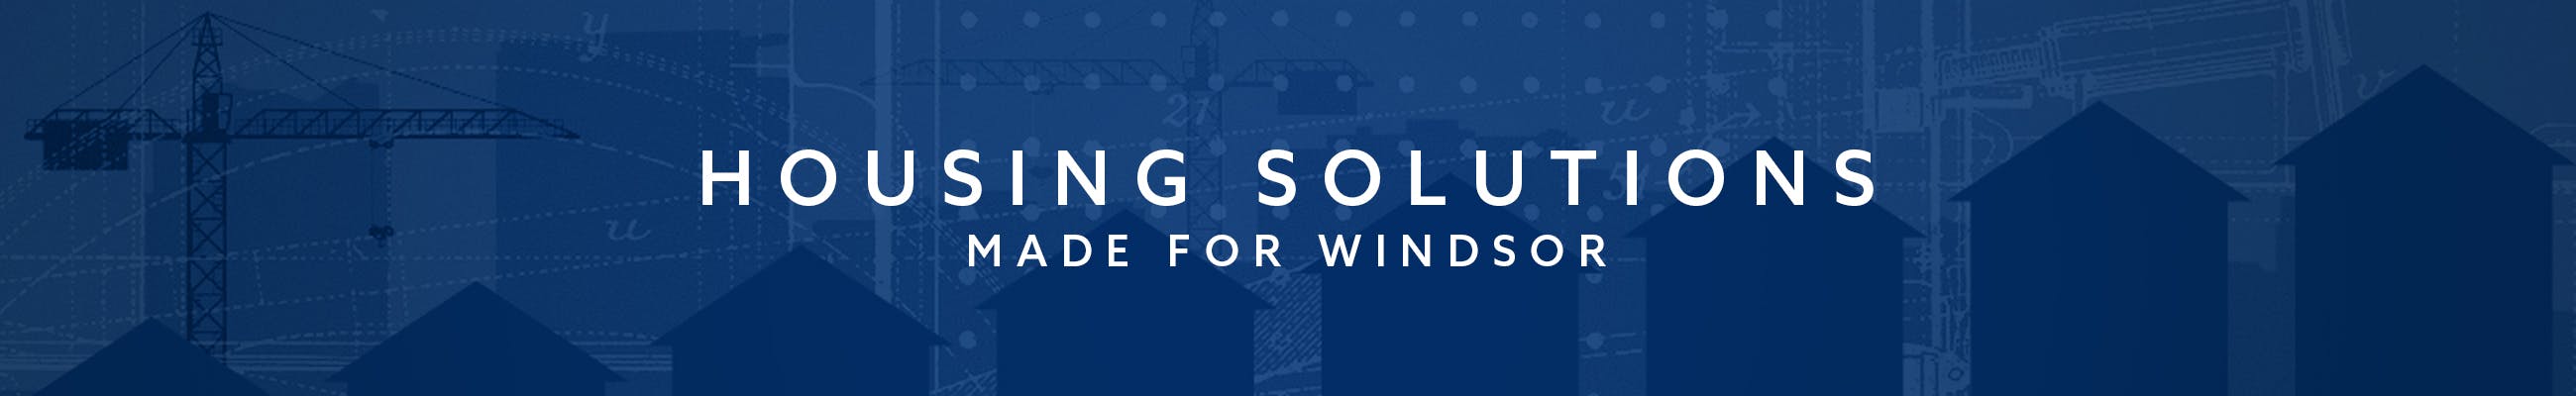 Housing Solutions Made for Windsor banner